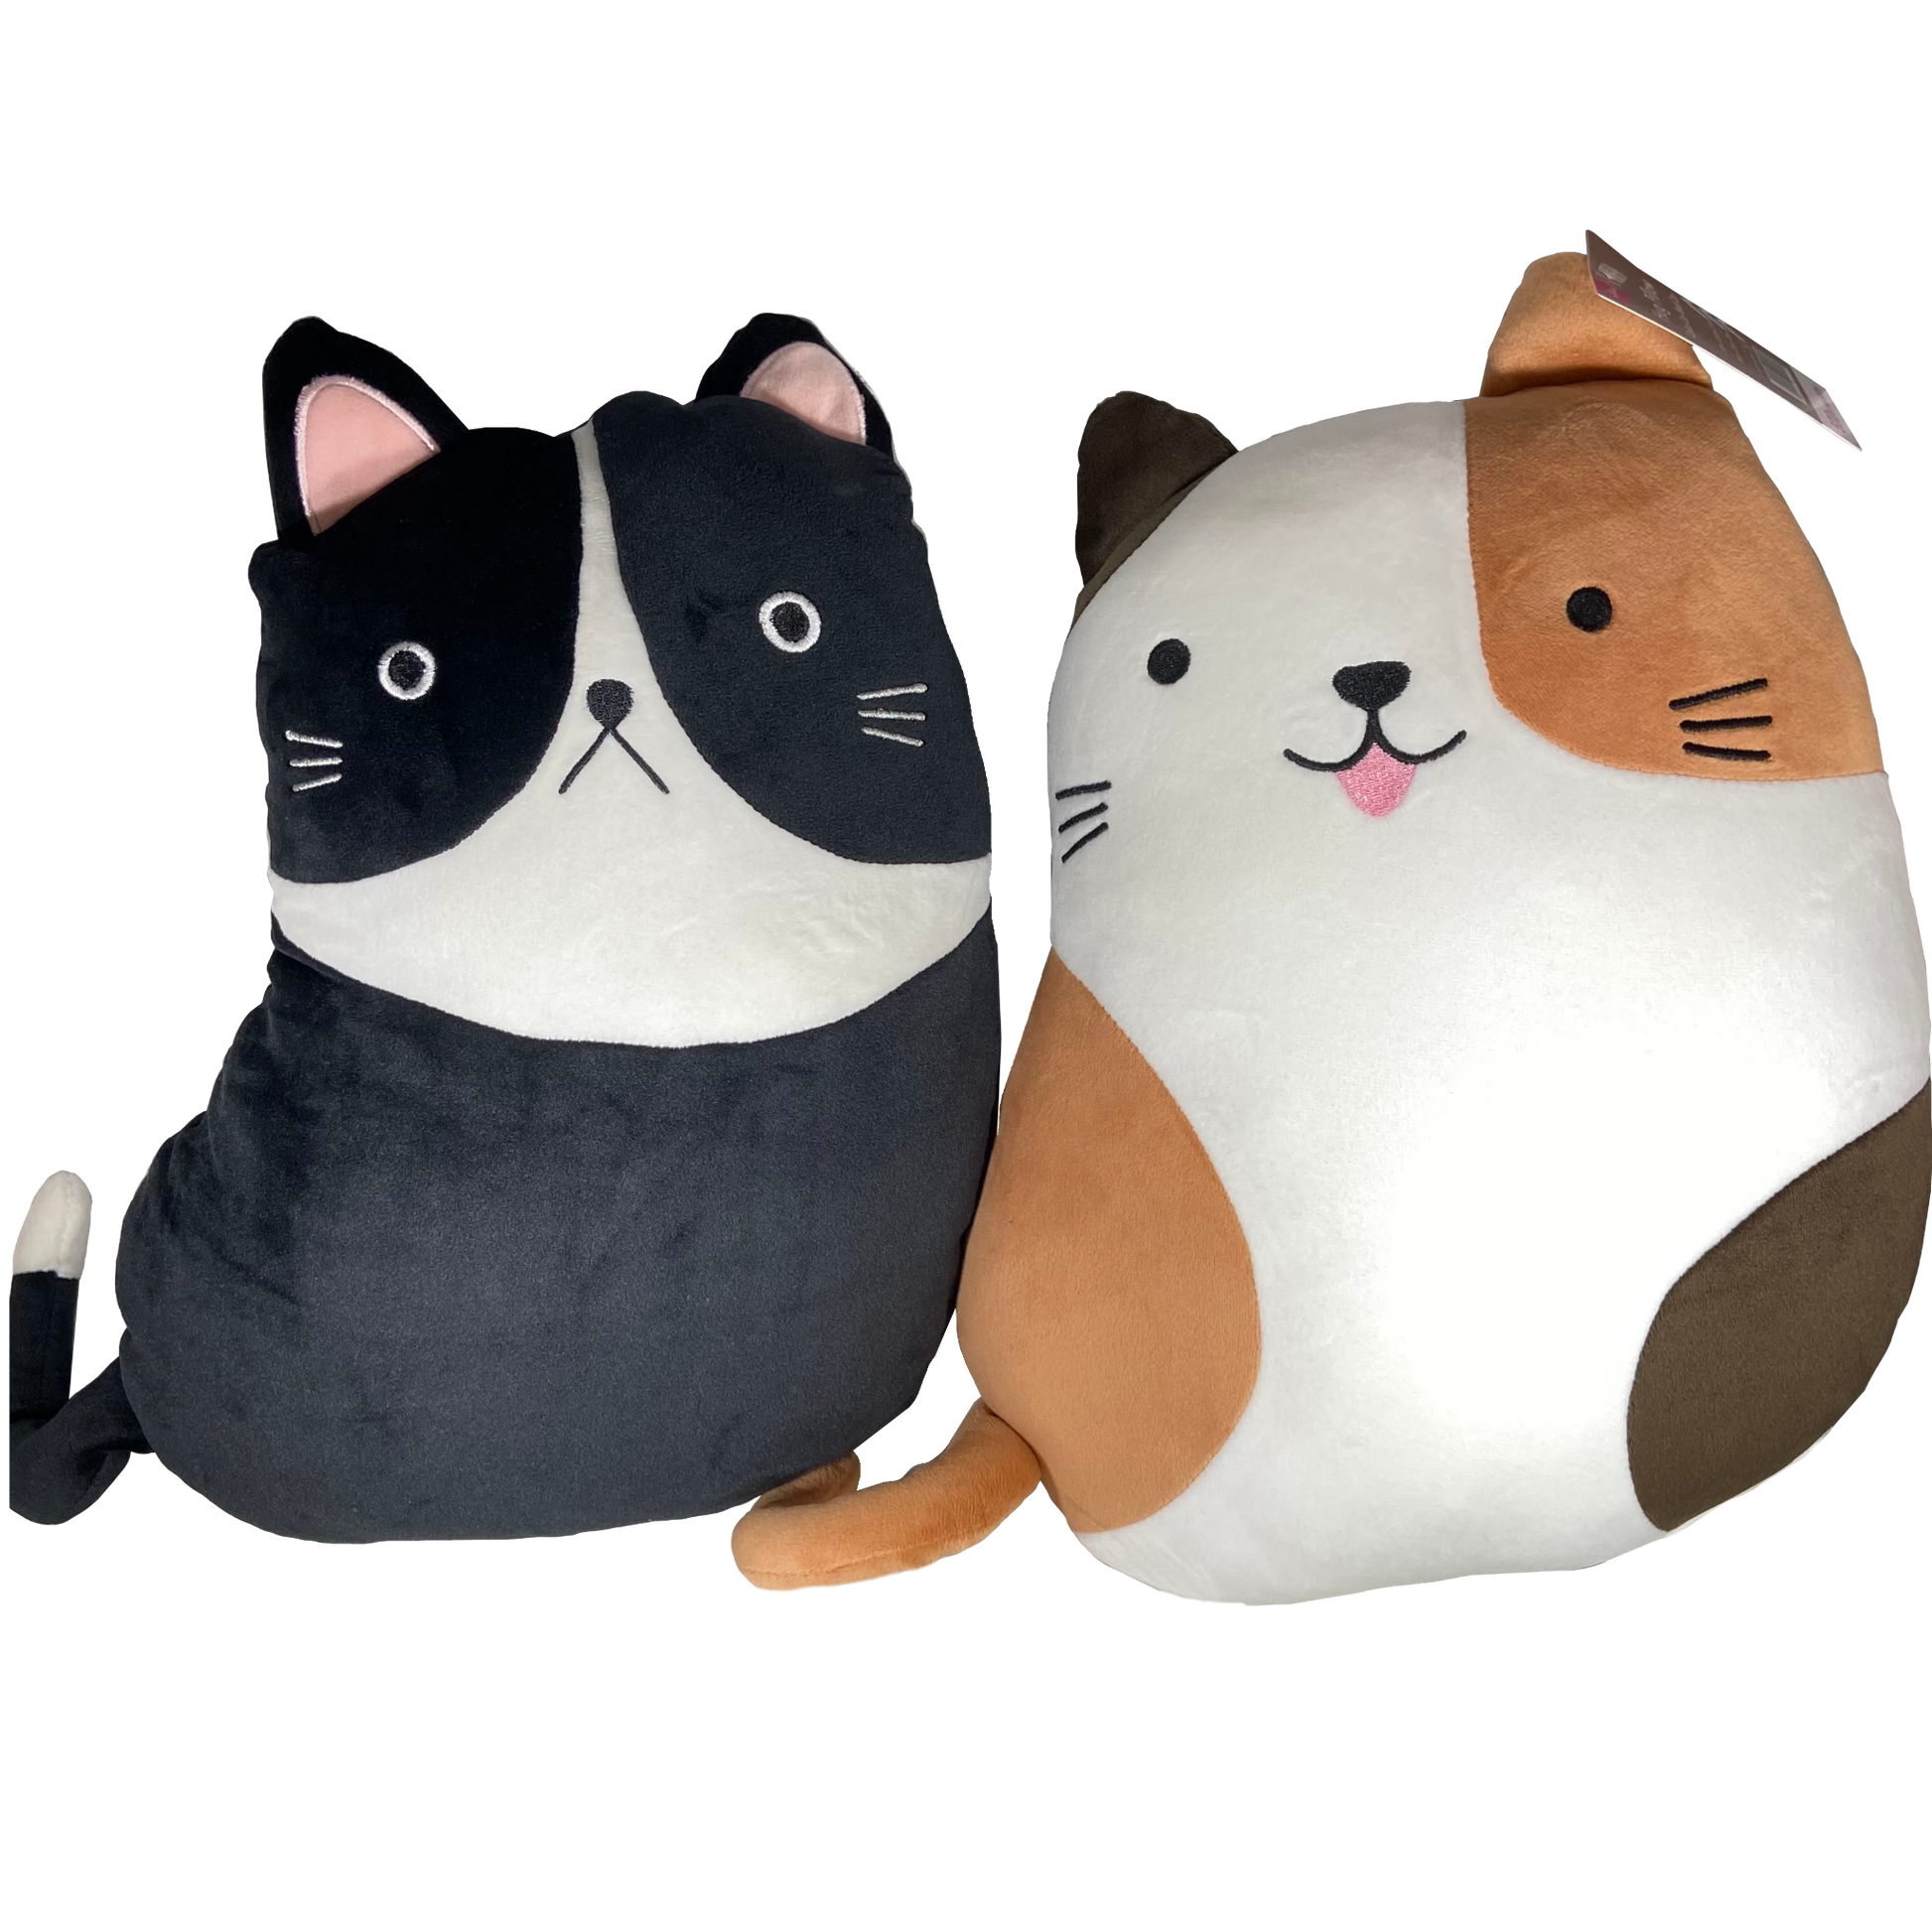 Plushie - Hug Pillows - Calico Cat - Black Cat